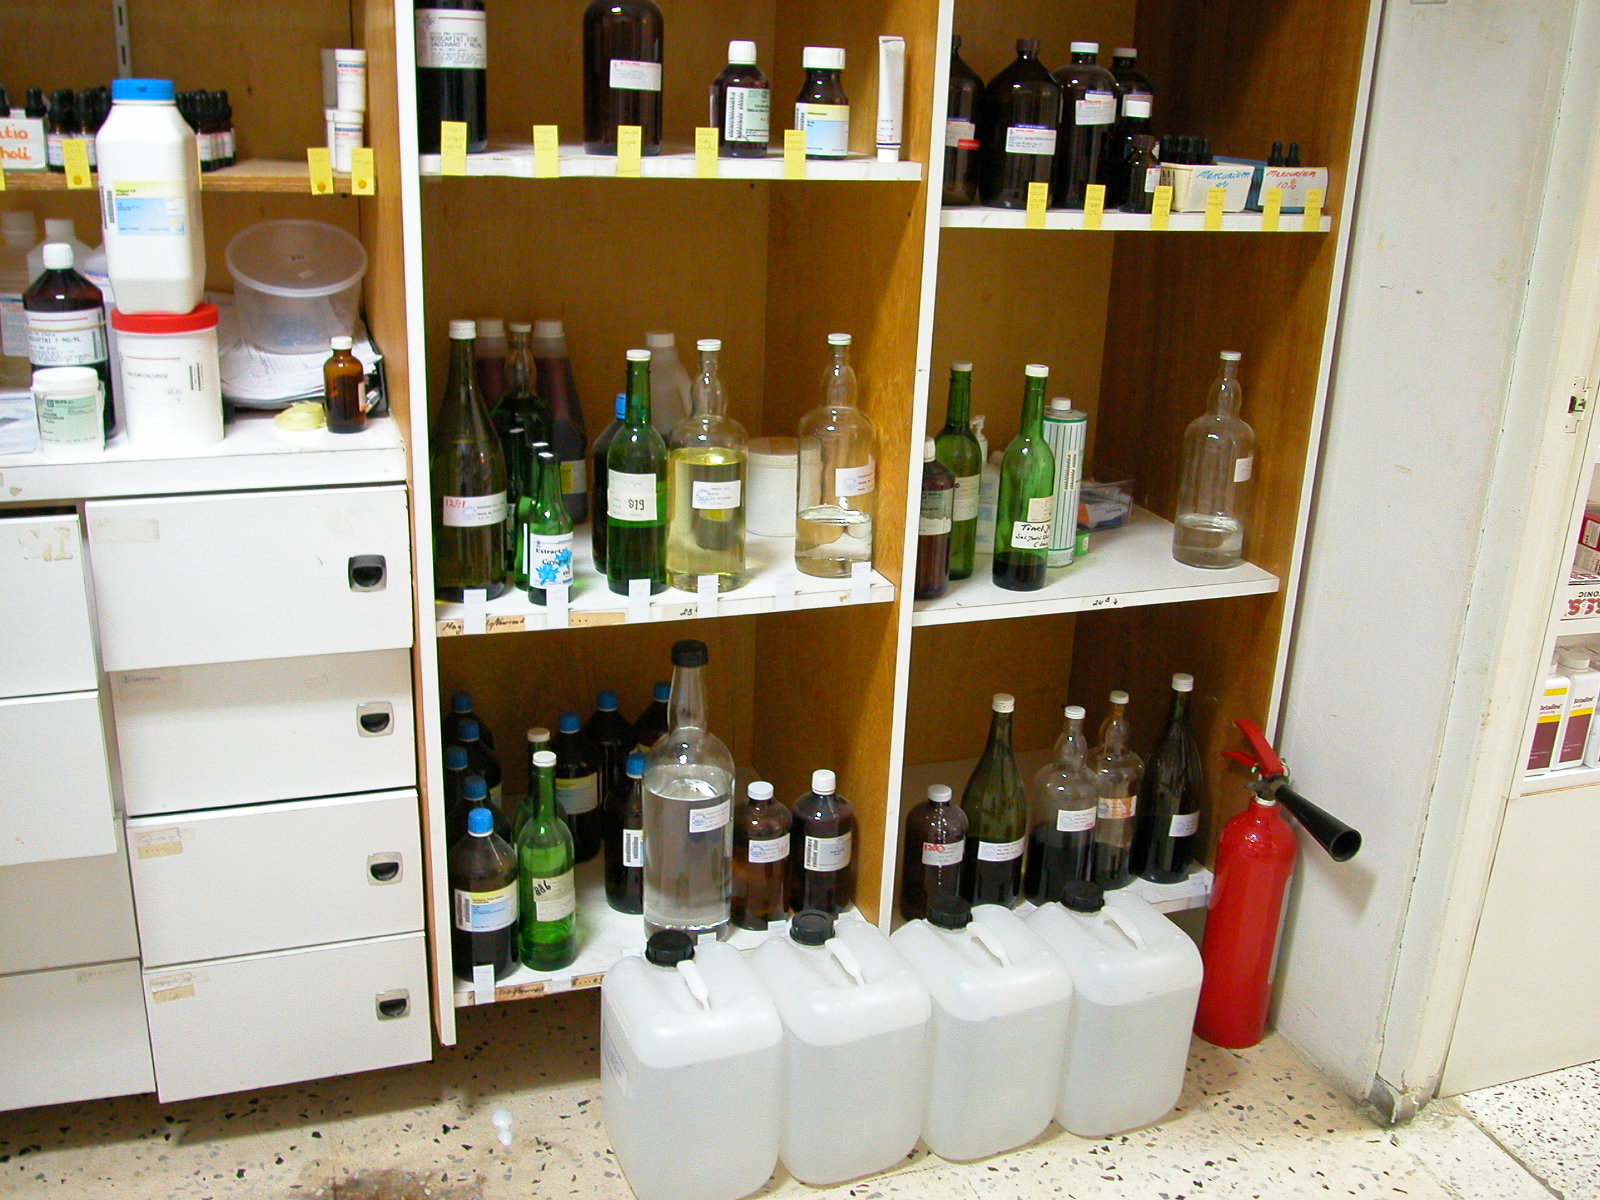 botika pharmacy jacco curacao objects household medicine medical first aid drug drugs bottle bottles